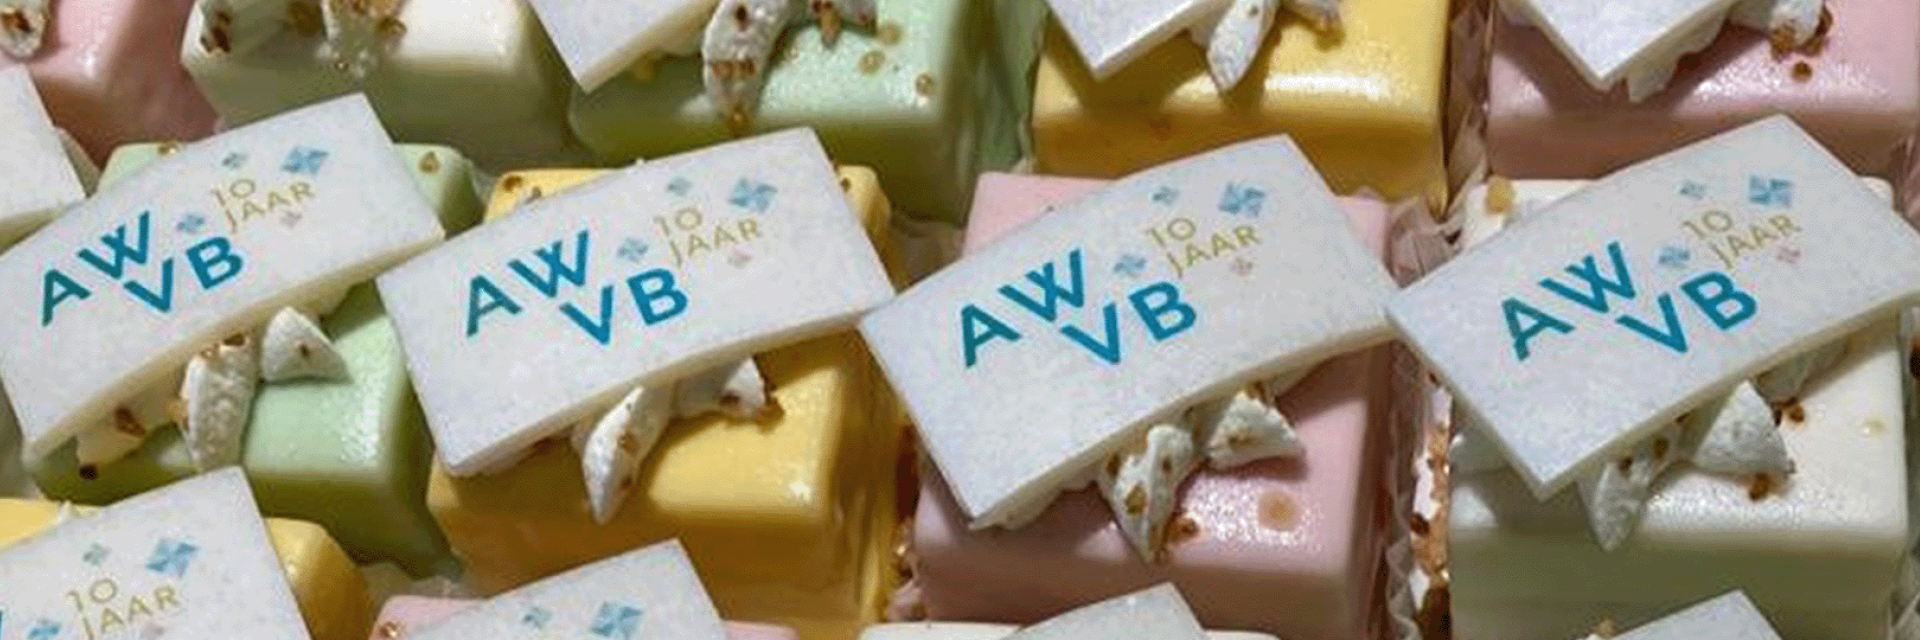 AWVB On Tour gebakjes met de tekst "10 jaar AWVB"